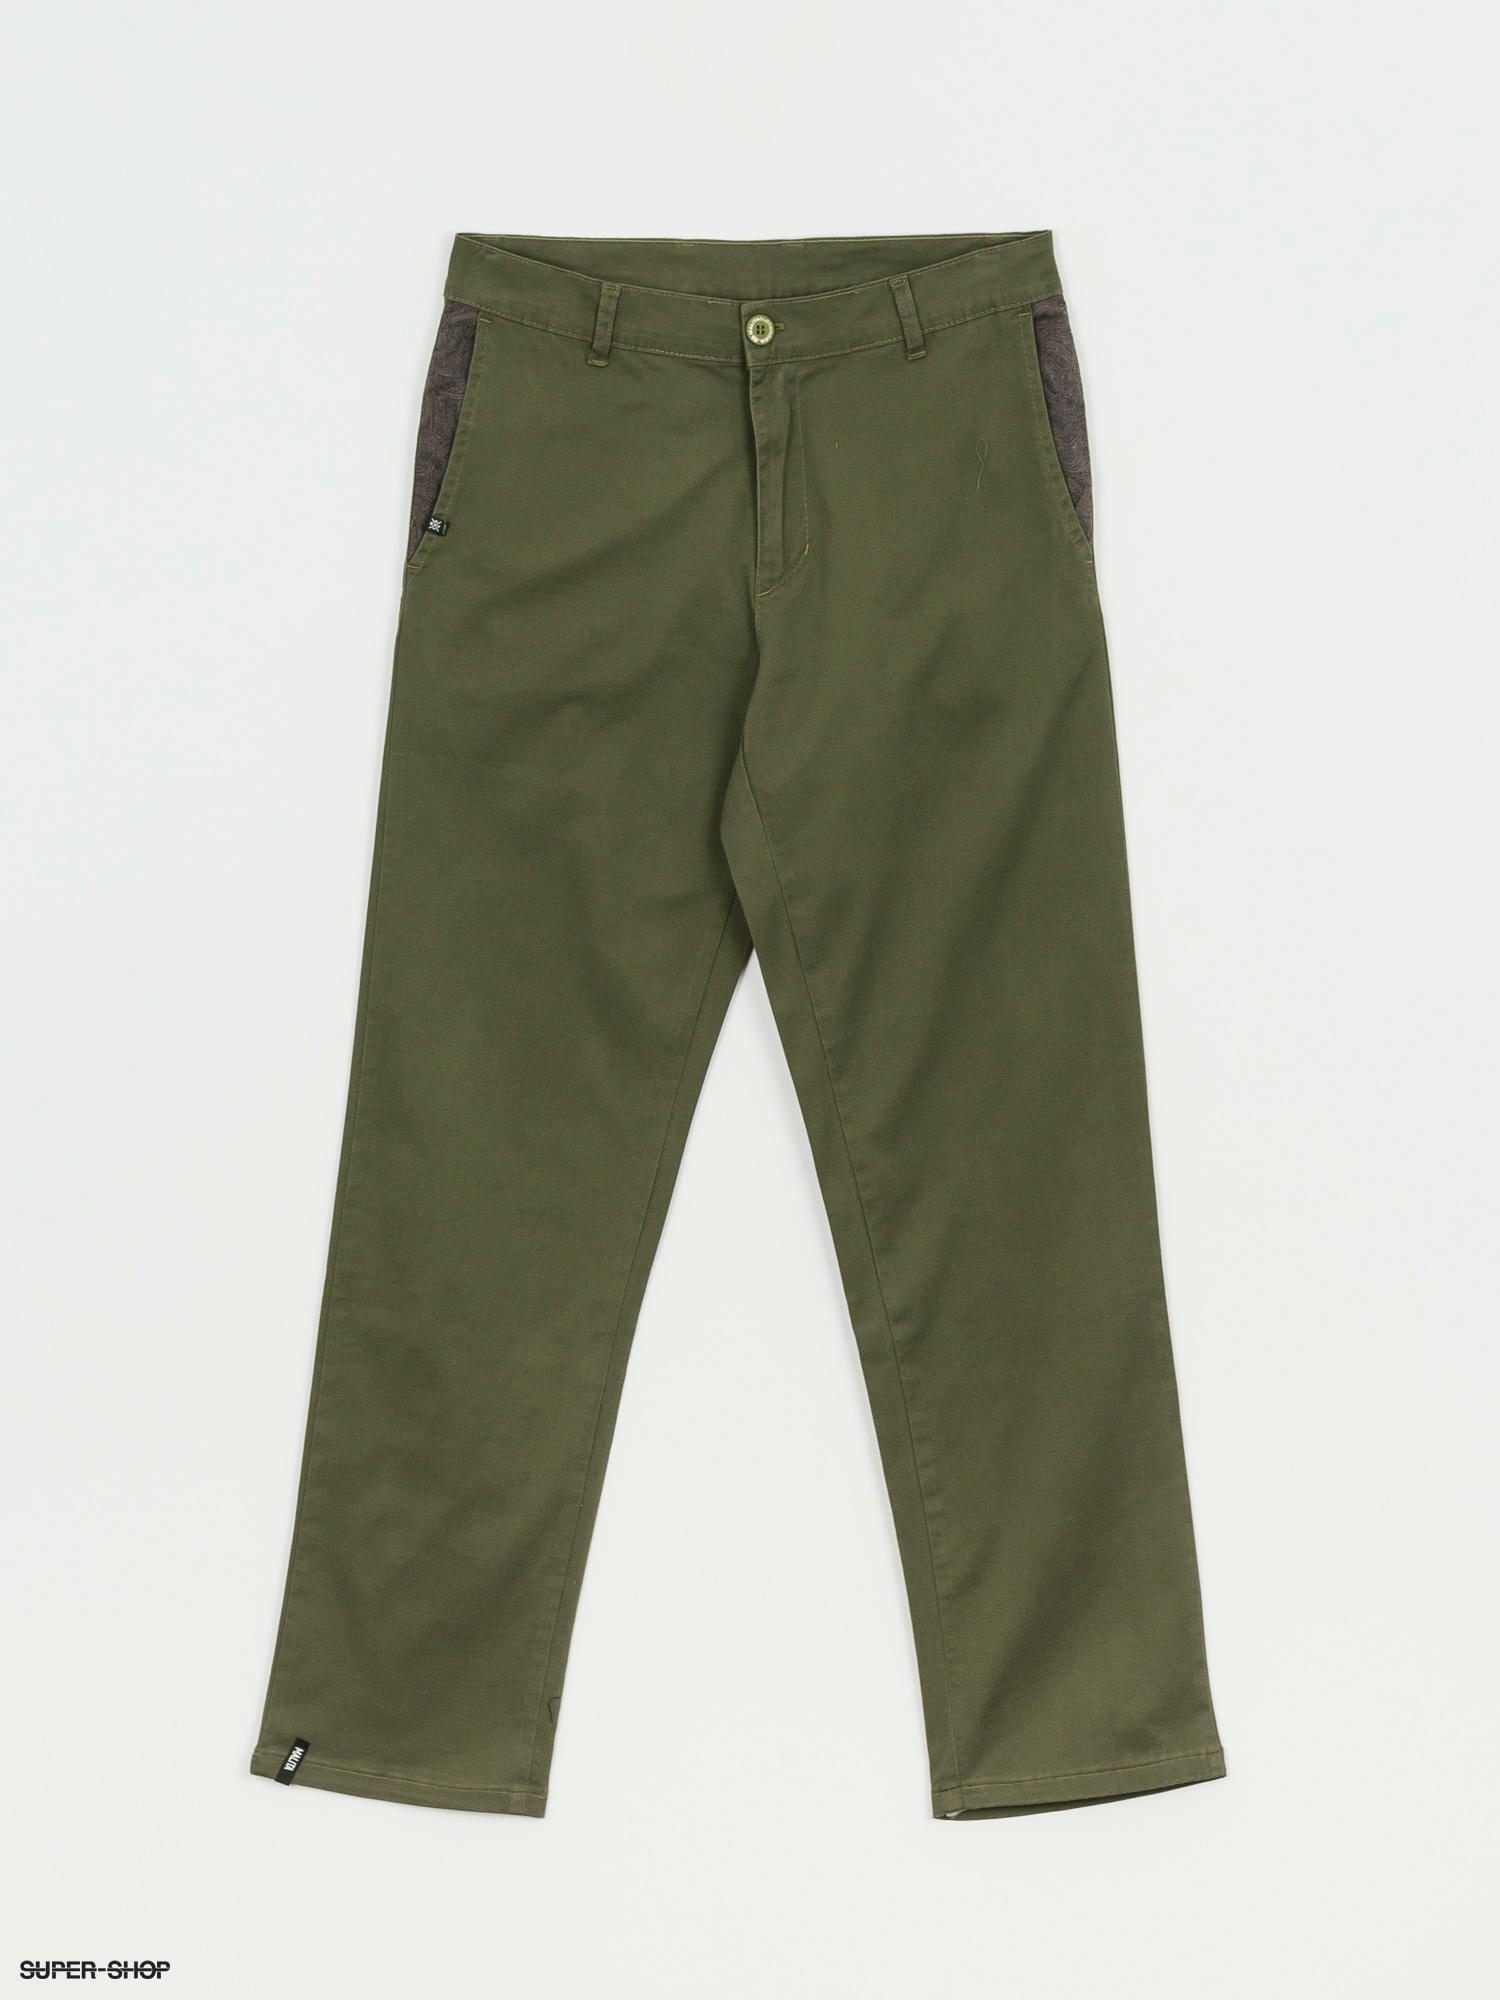 olive green loose pants